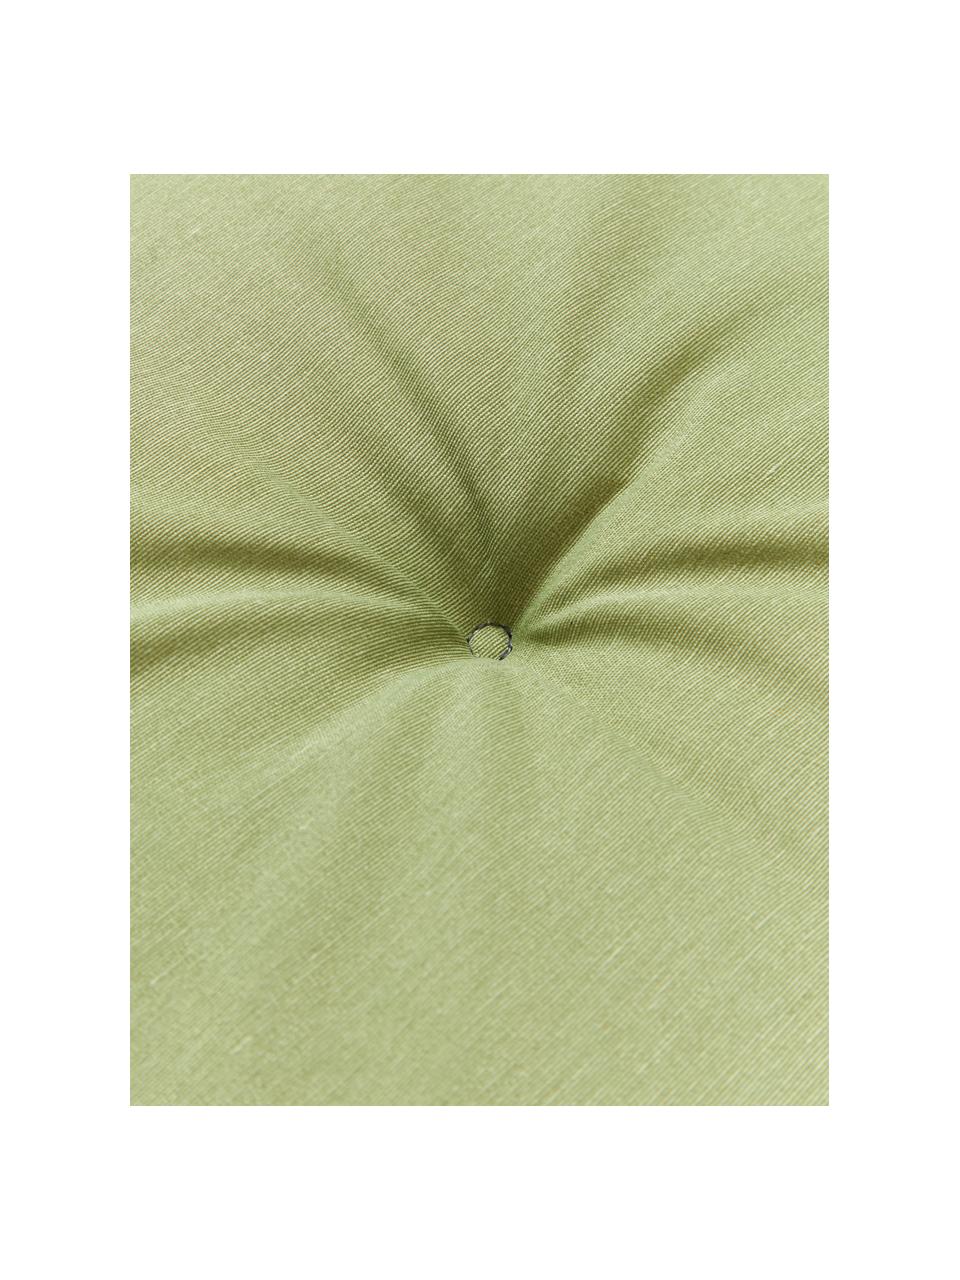 Cuscino per panca in tinta unita Panama, Rivestimento: 50% cotone, 45% poliester, Verde chiaro, Larg. 48 x Lung. 120 cm